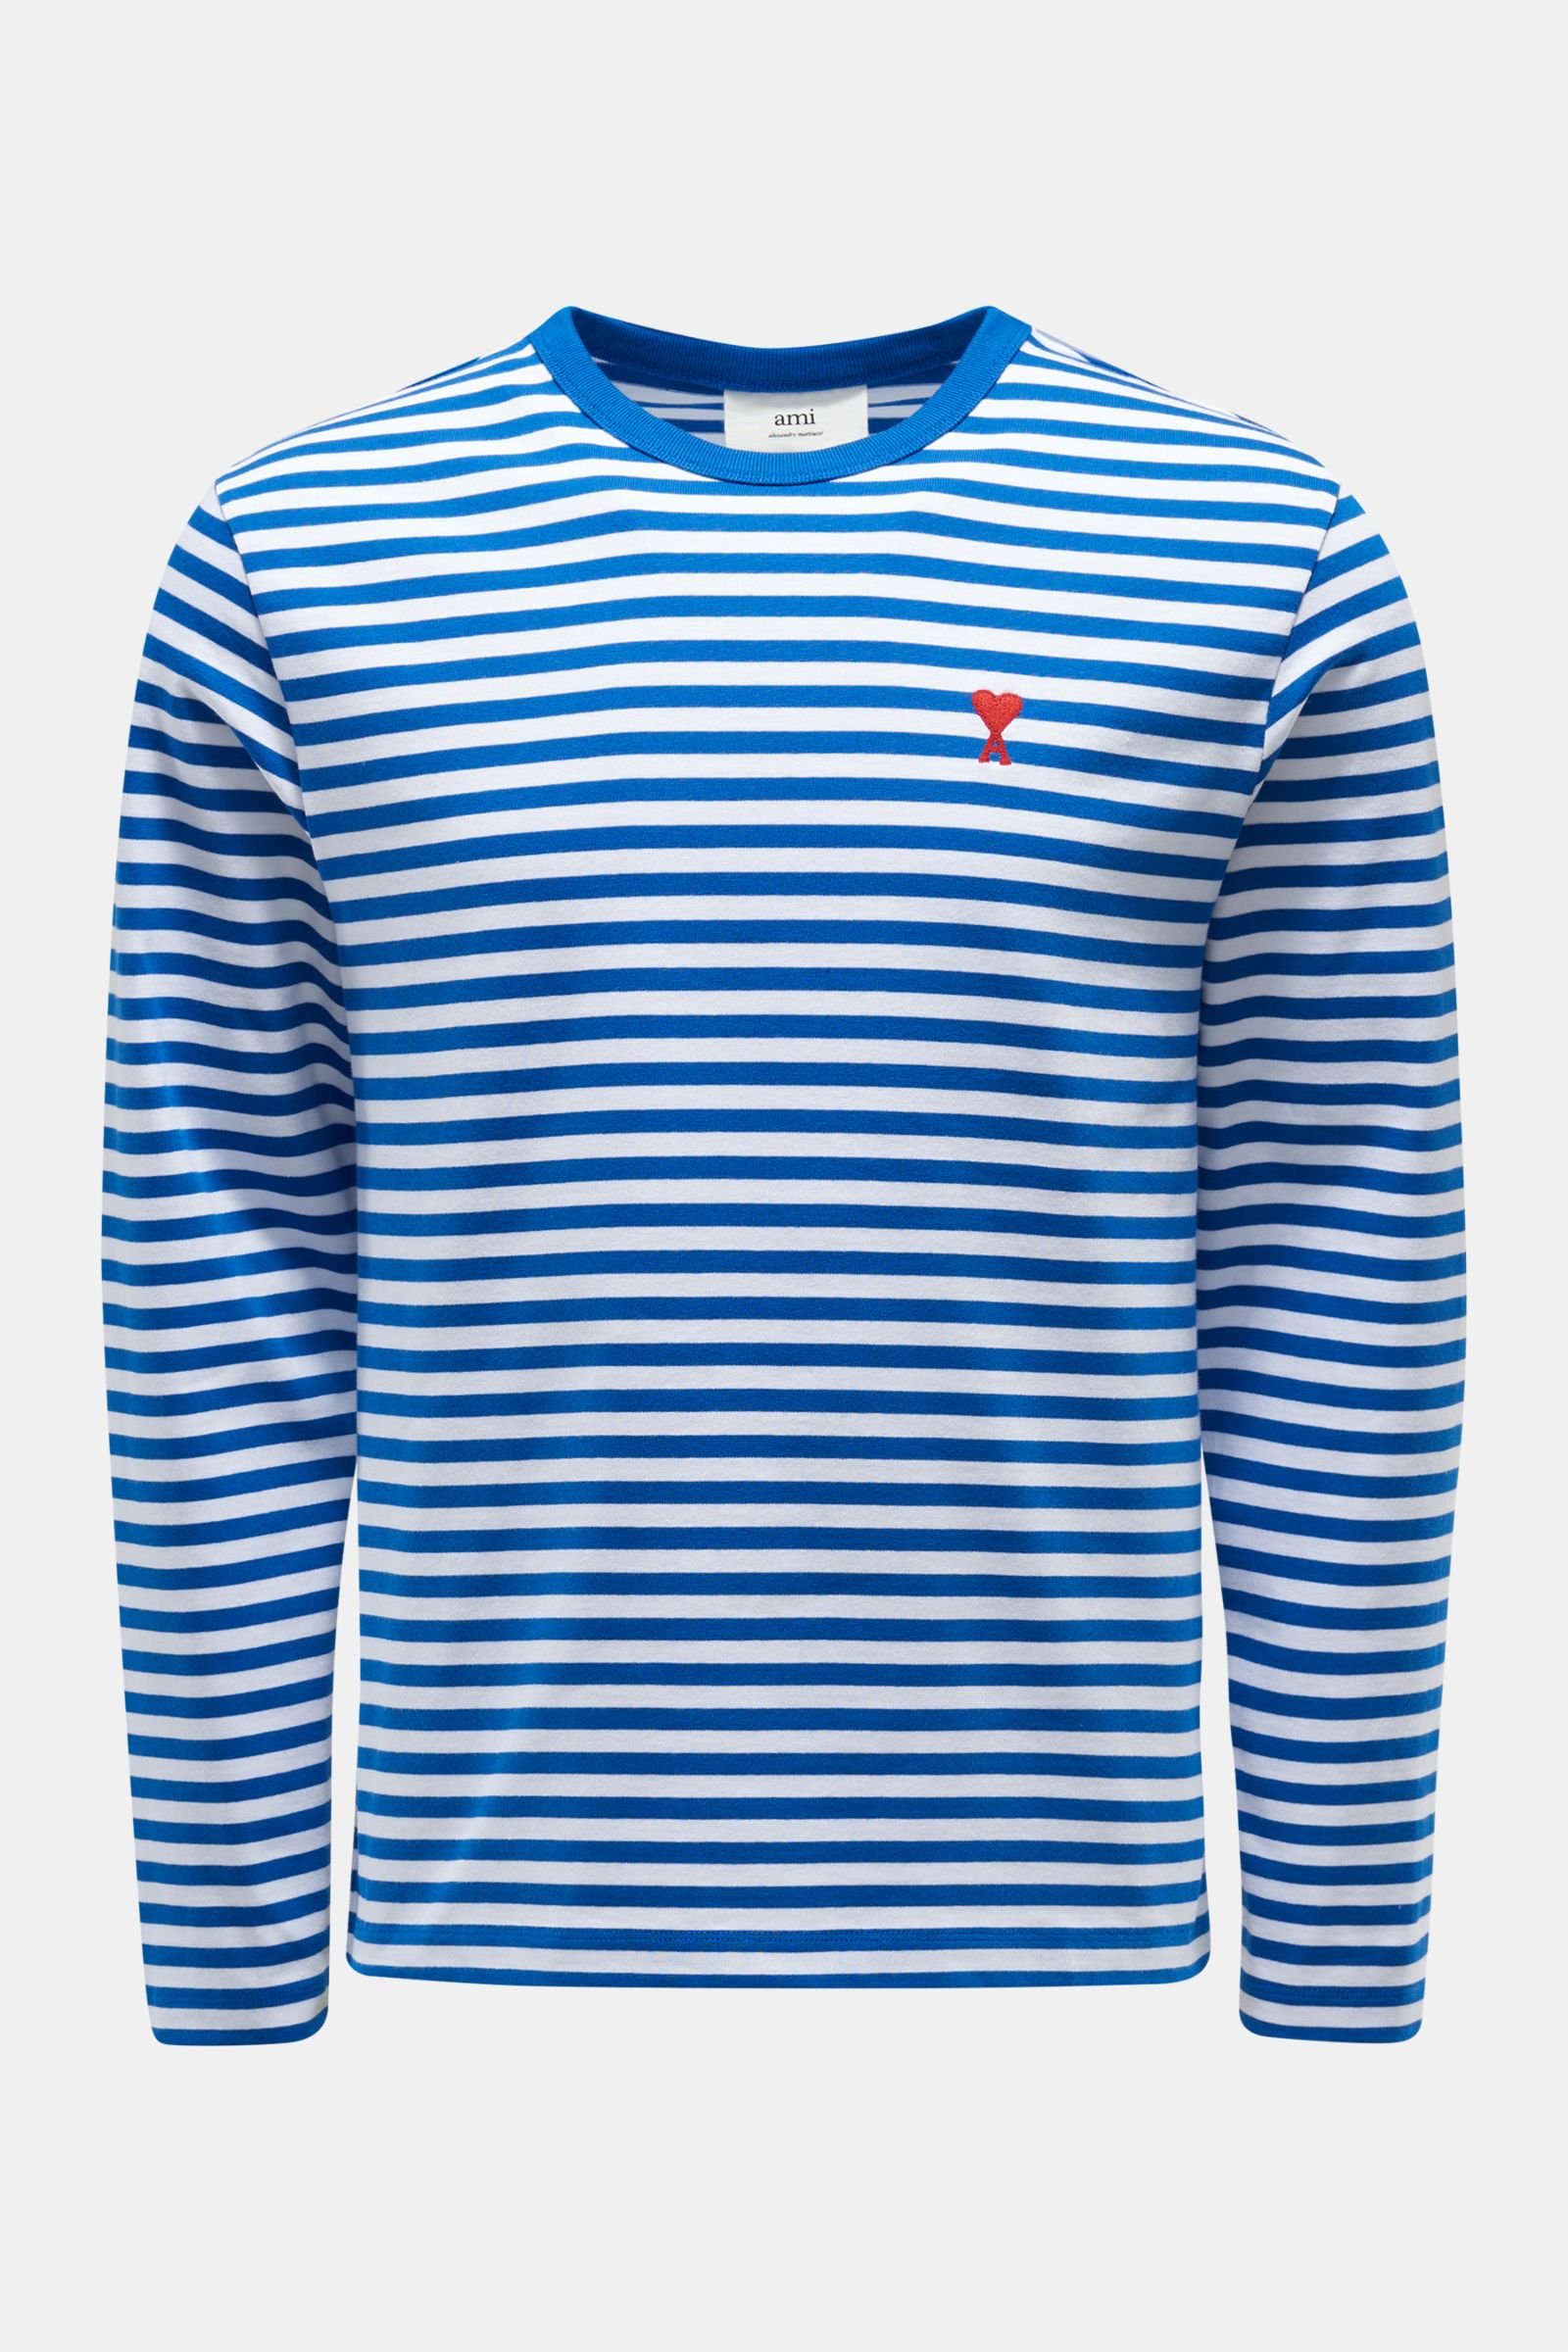 Crew neck jumper blue/white striped